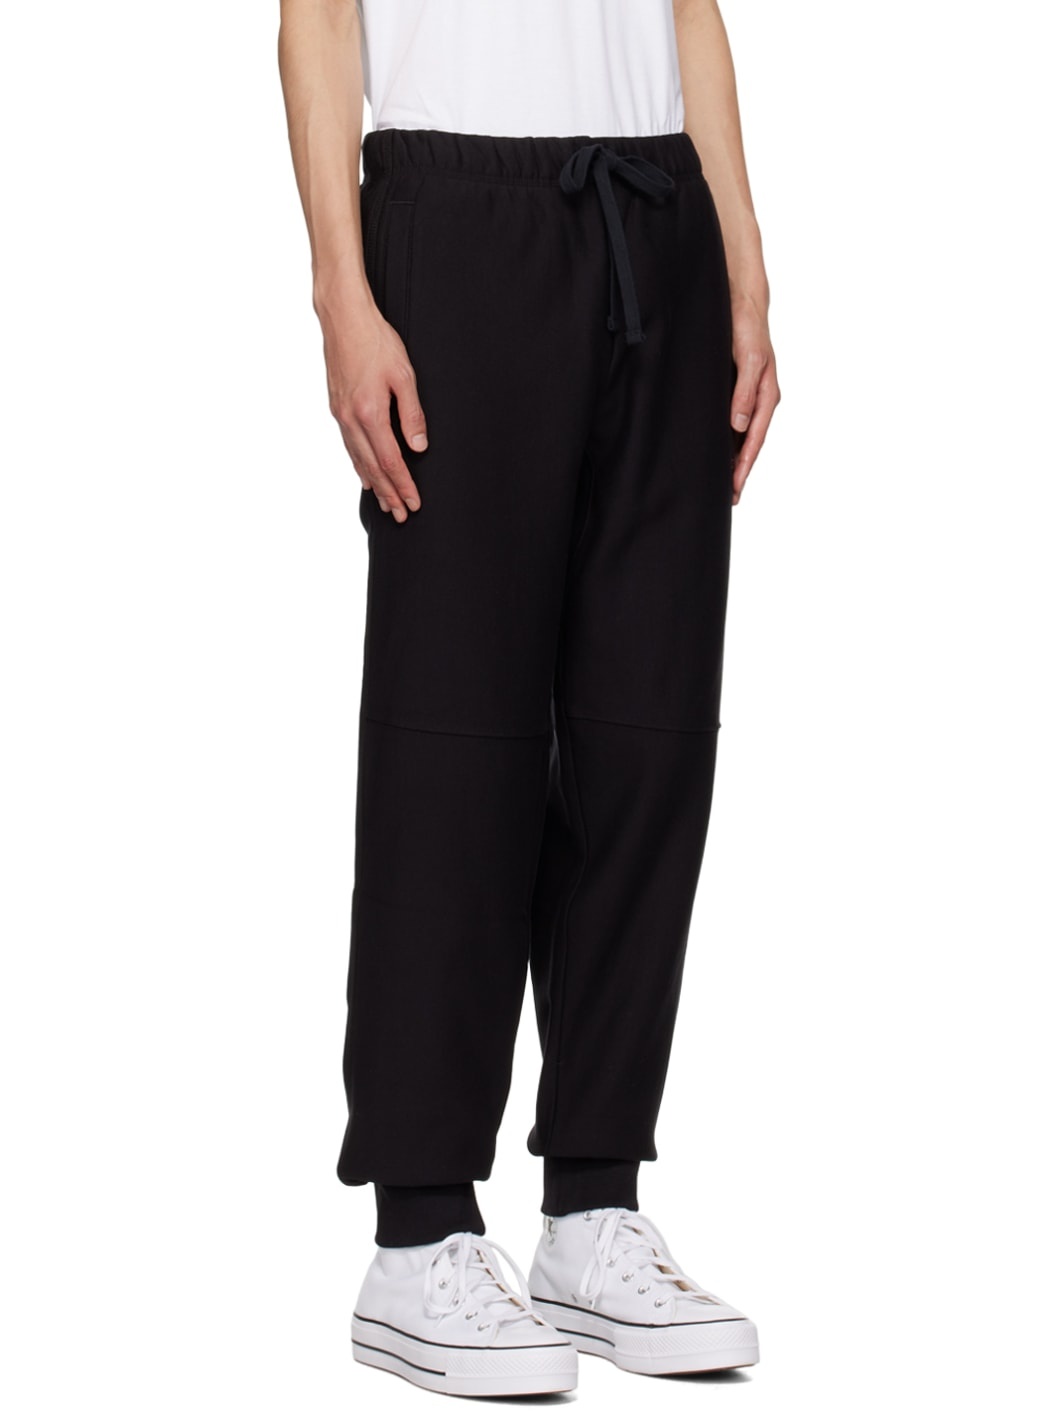 Black Embroidered Sweatpants - 2